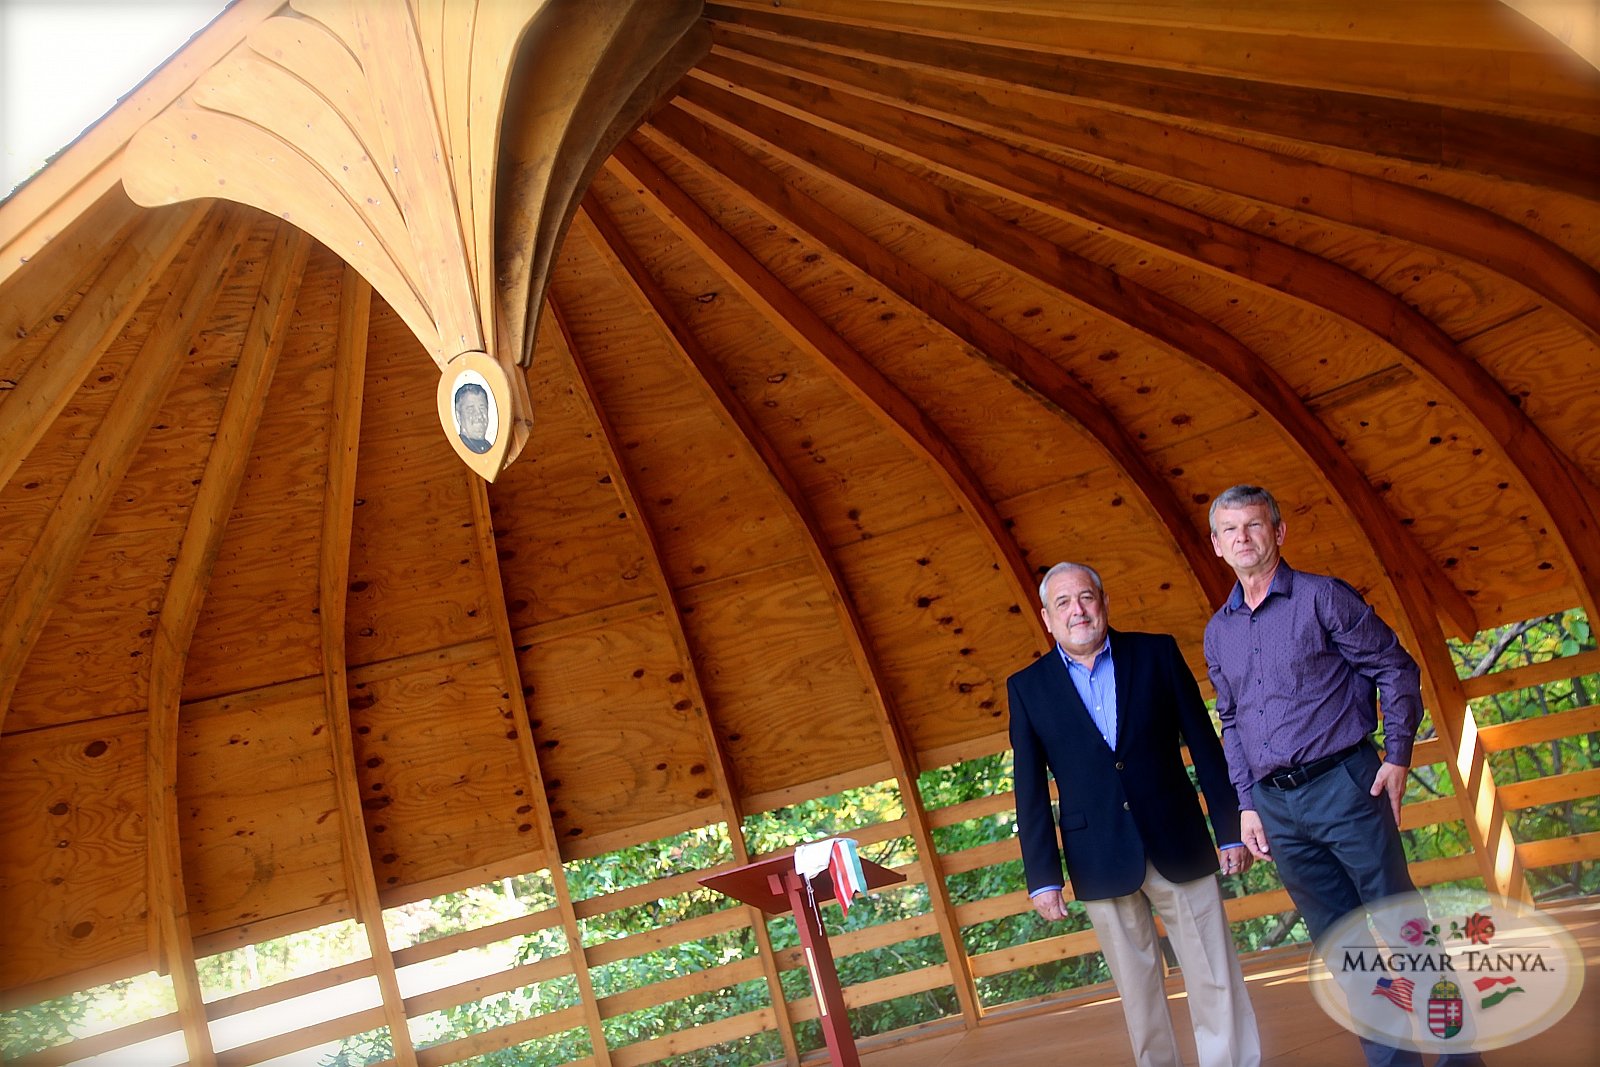 Dedication of the yurt for the memory of Csaba Kiss